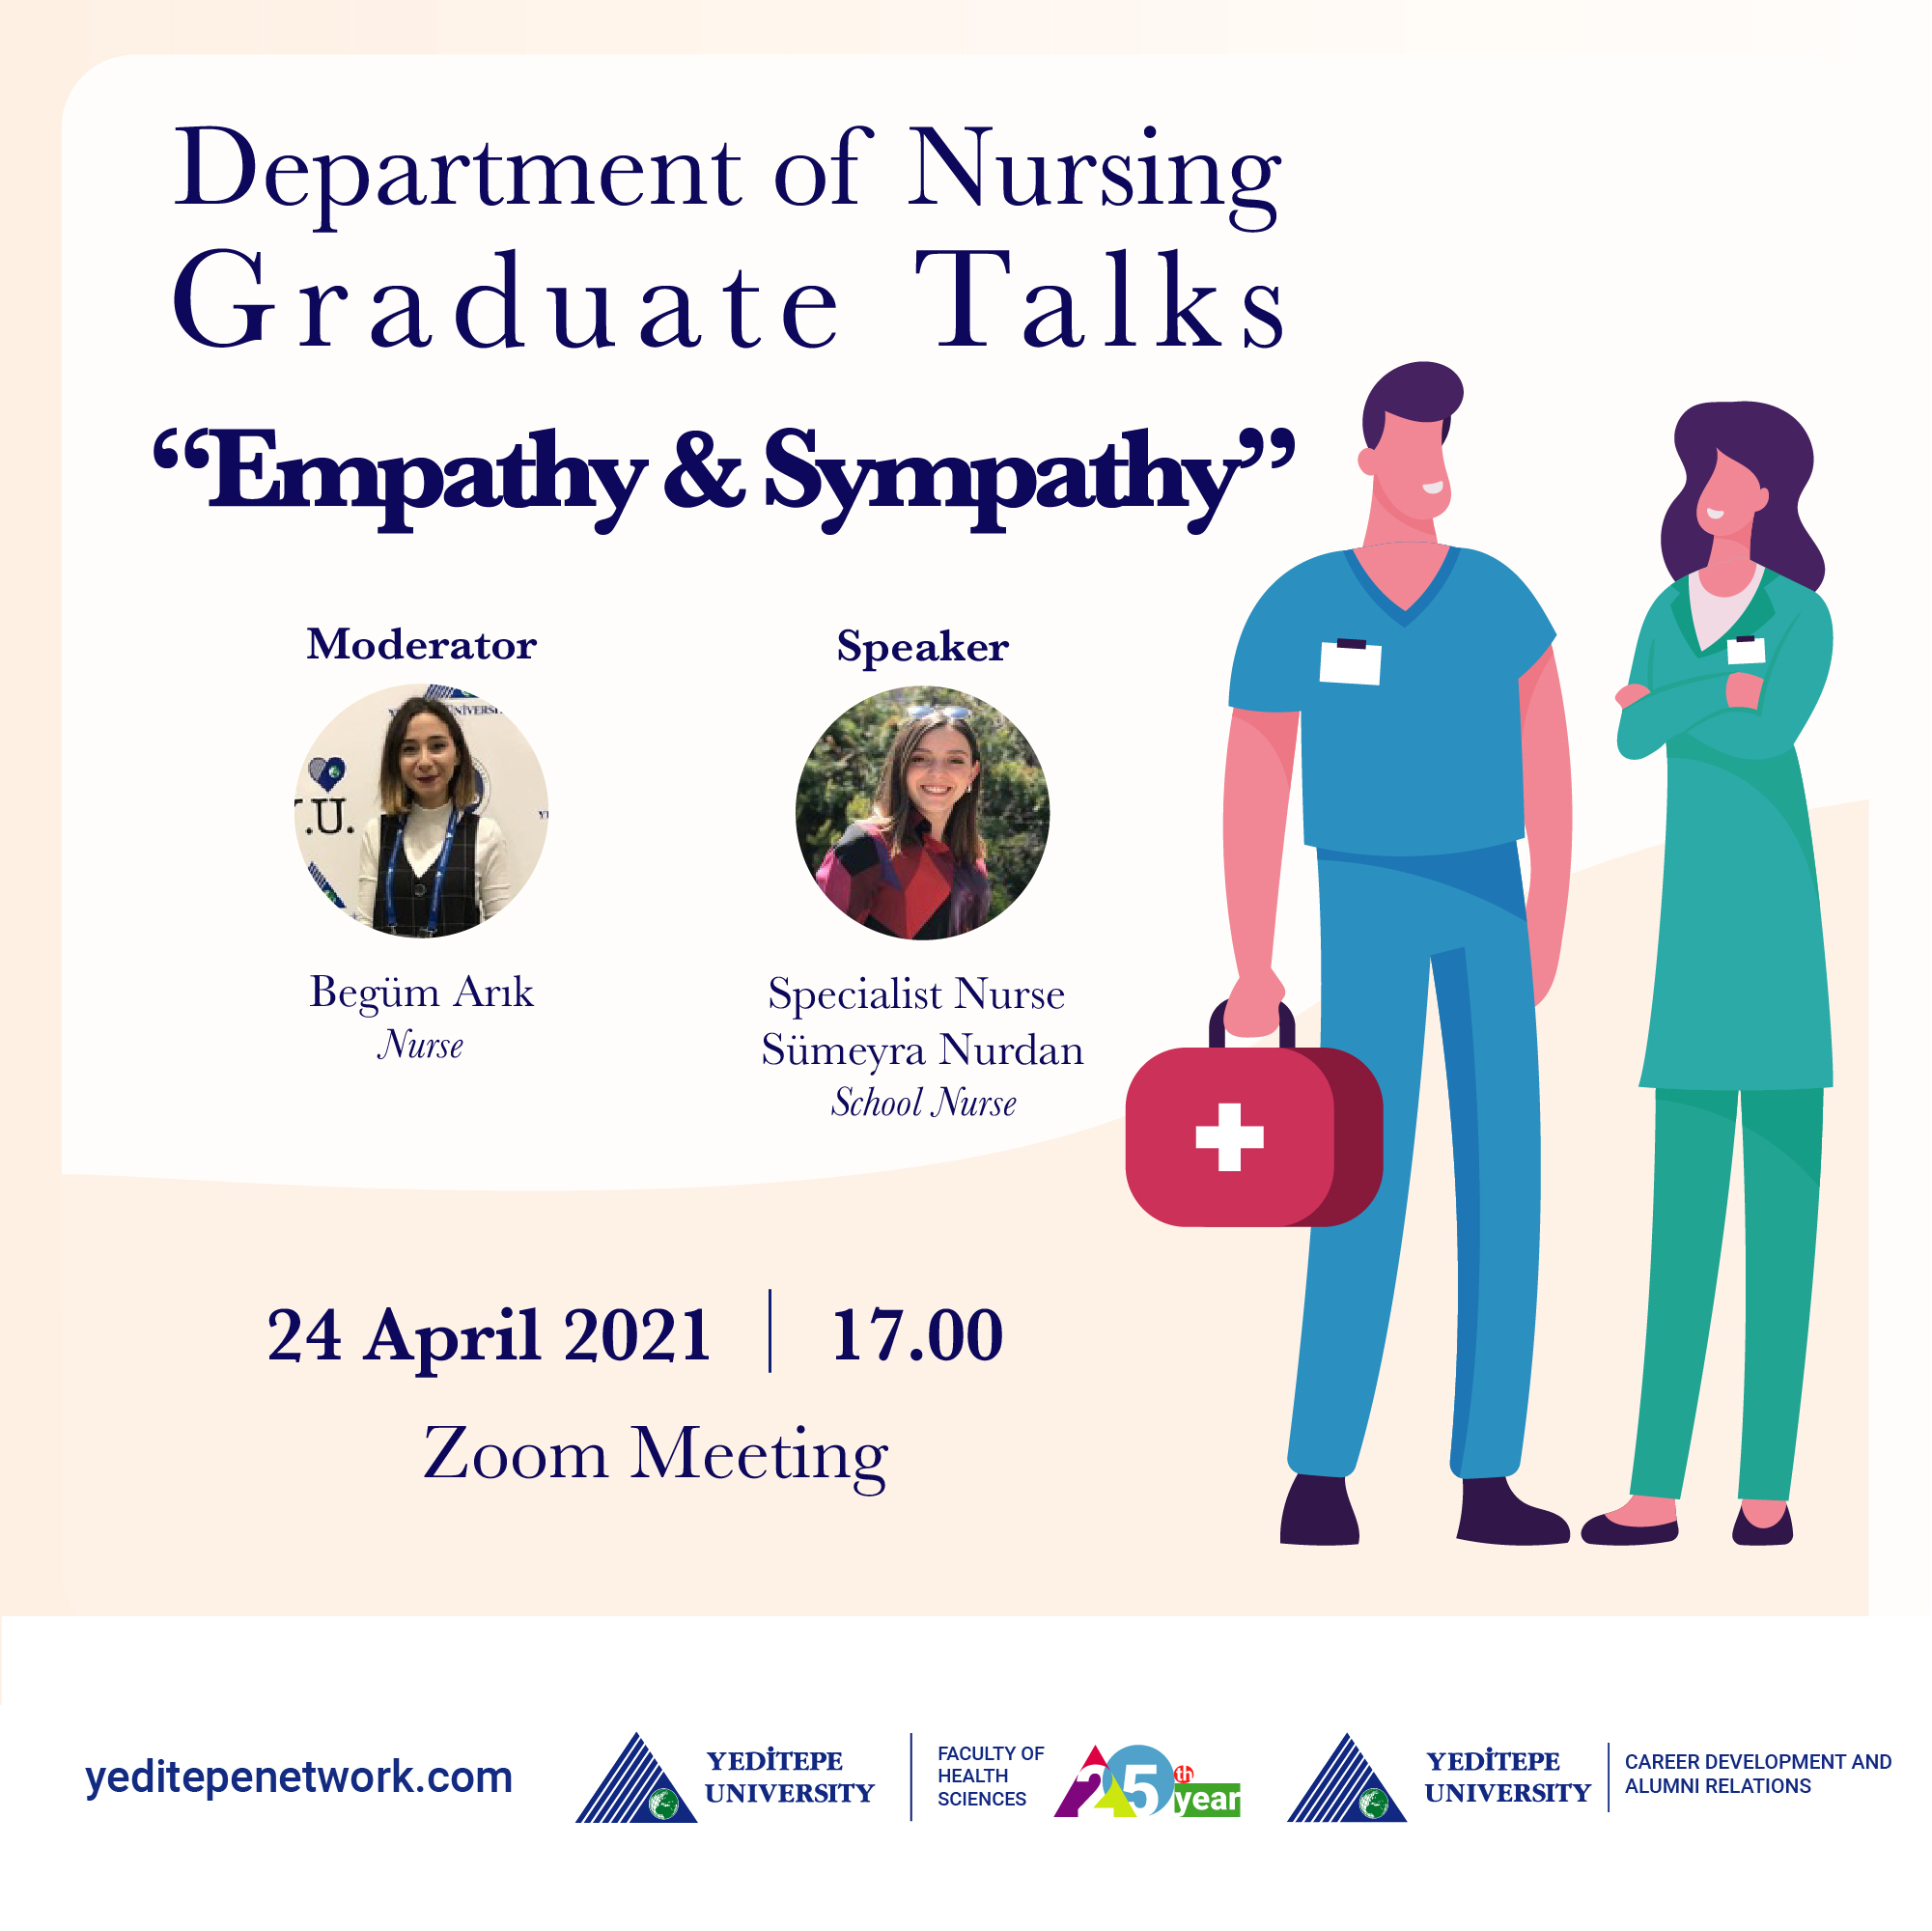 Department of Nursing Graduate Talks - Empathy & Sympathy